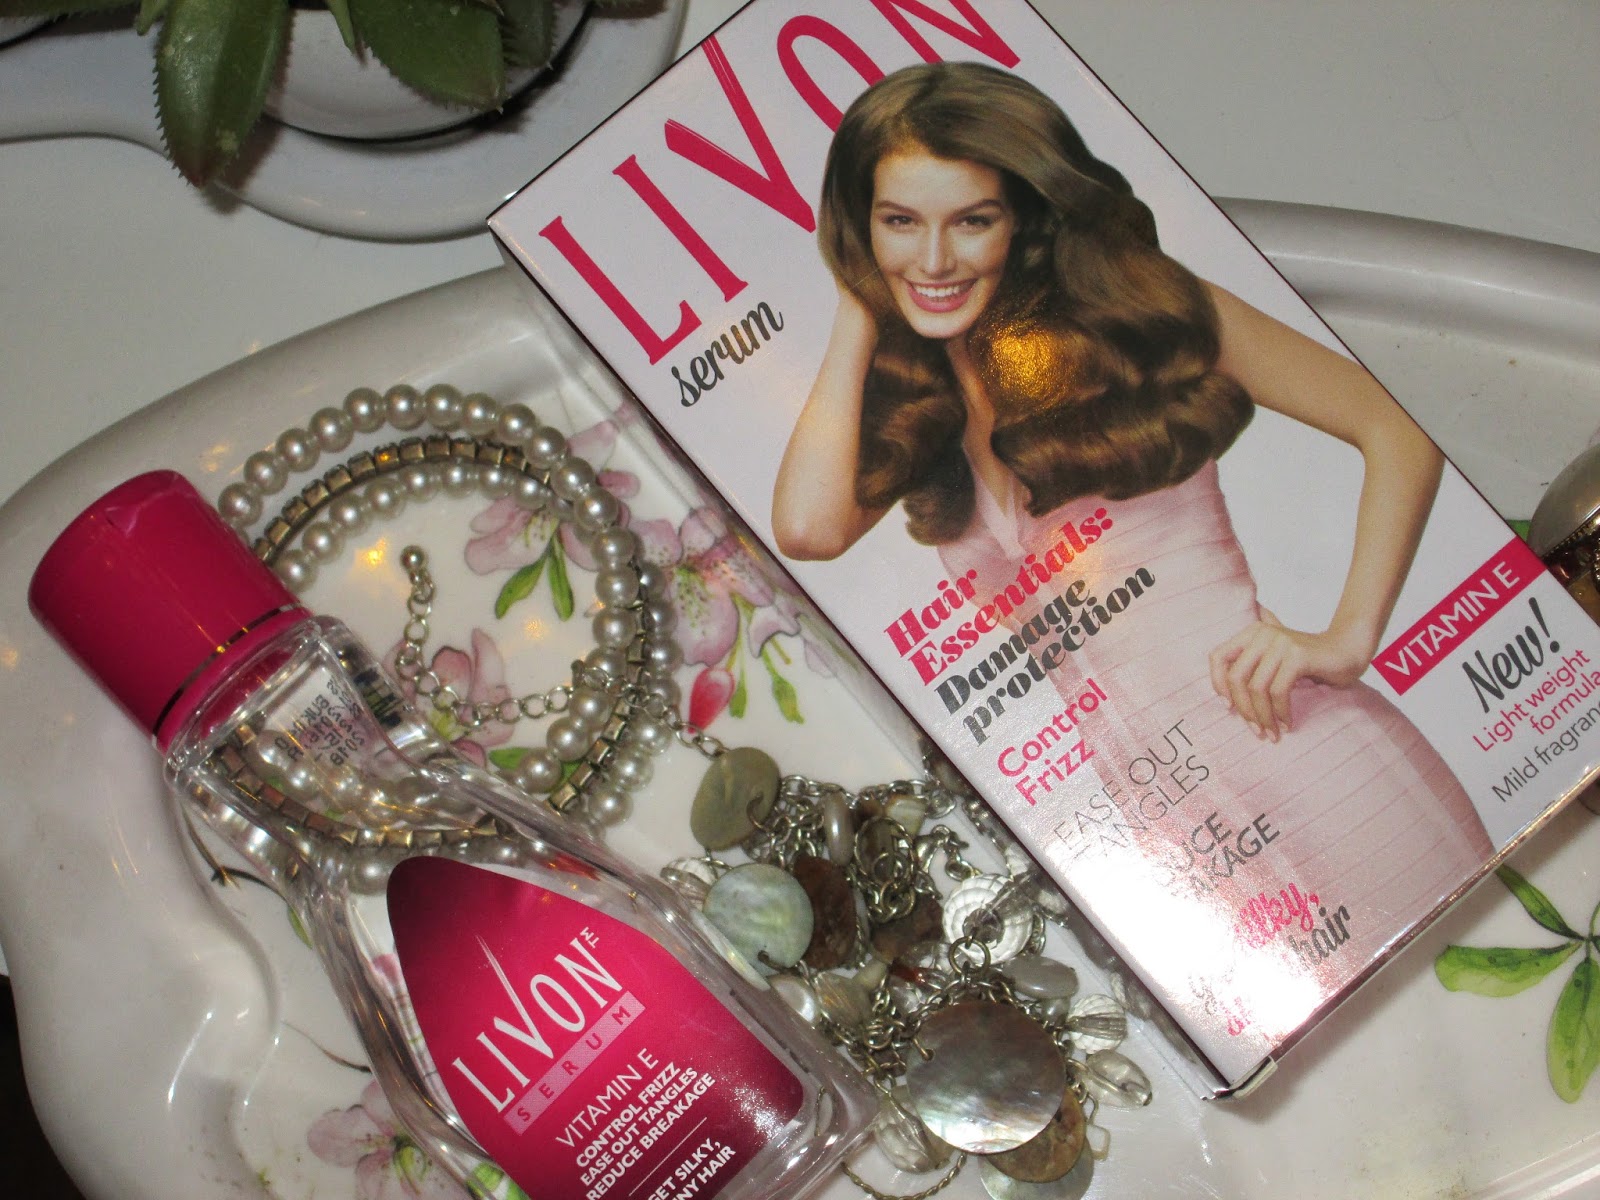 ❤ MAKEUP FOR ETERNITY ❤: Livon Hair Serum Review